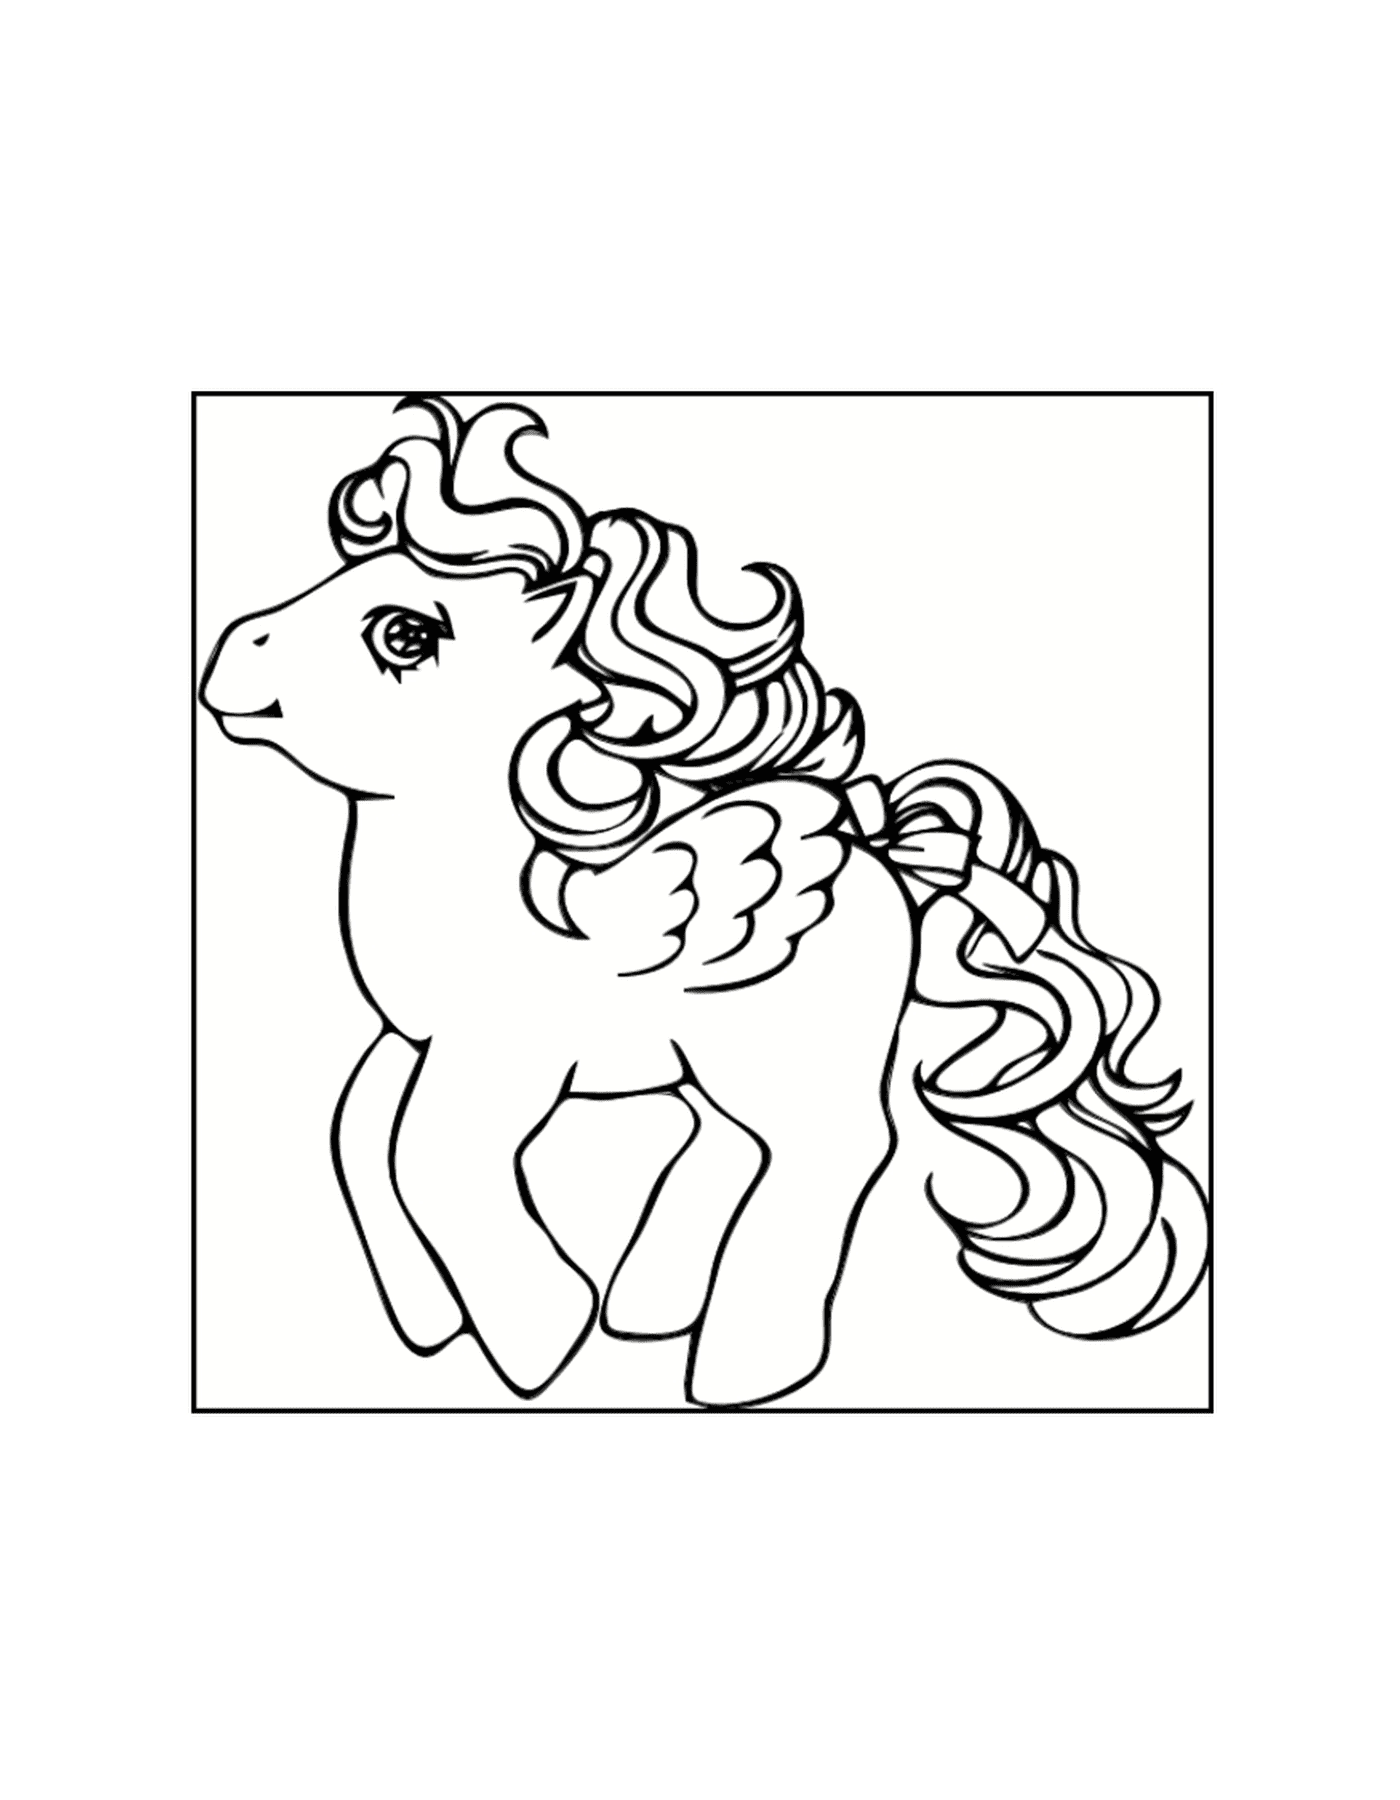  Pony ala principessa, fata ed elegante 